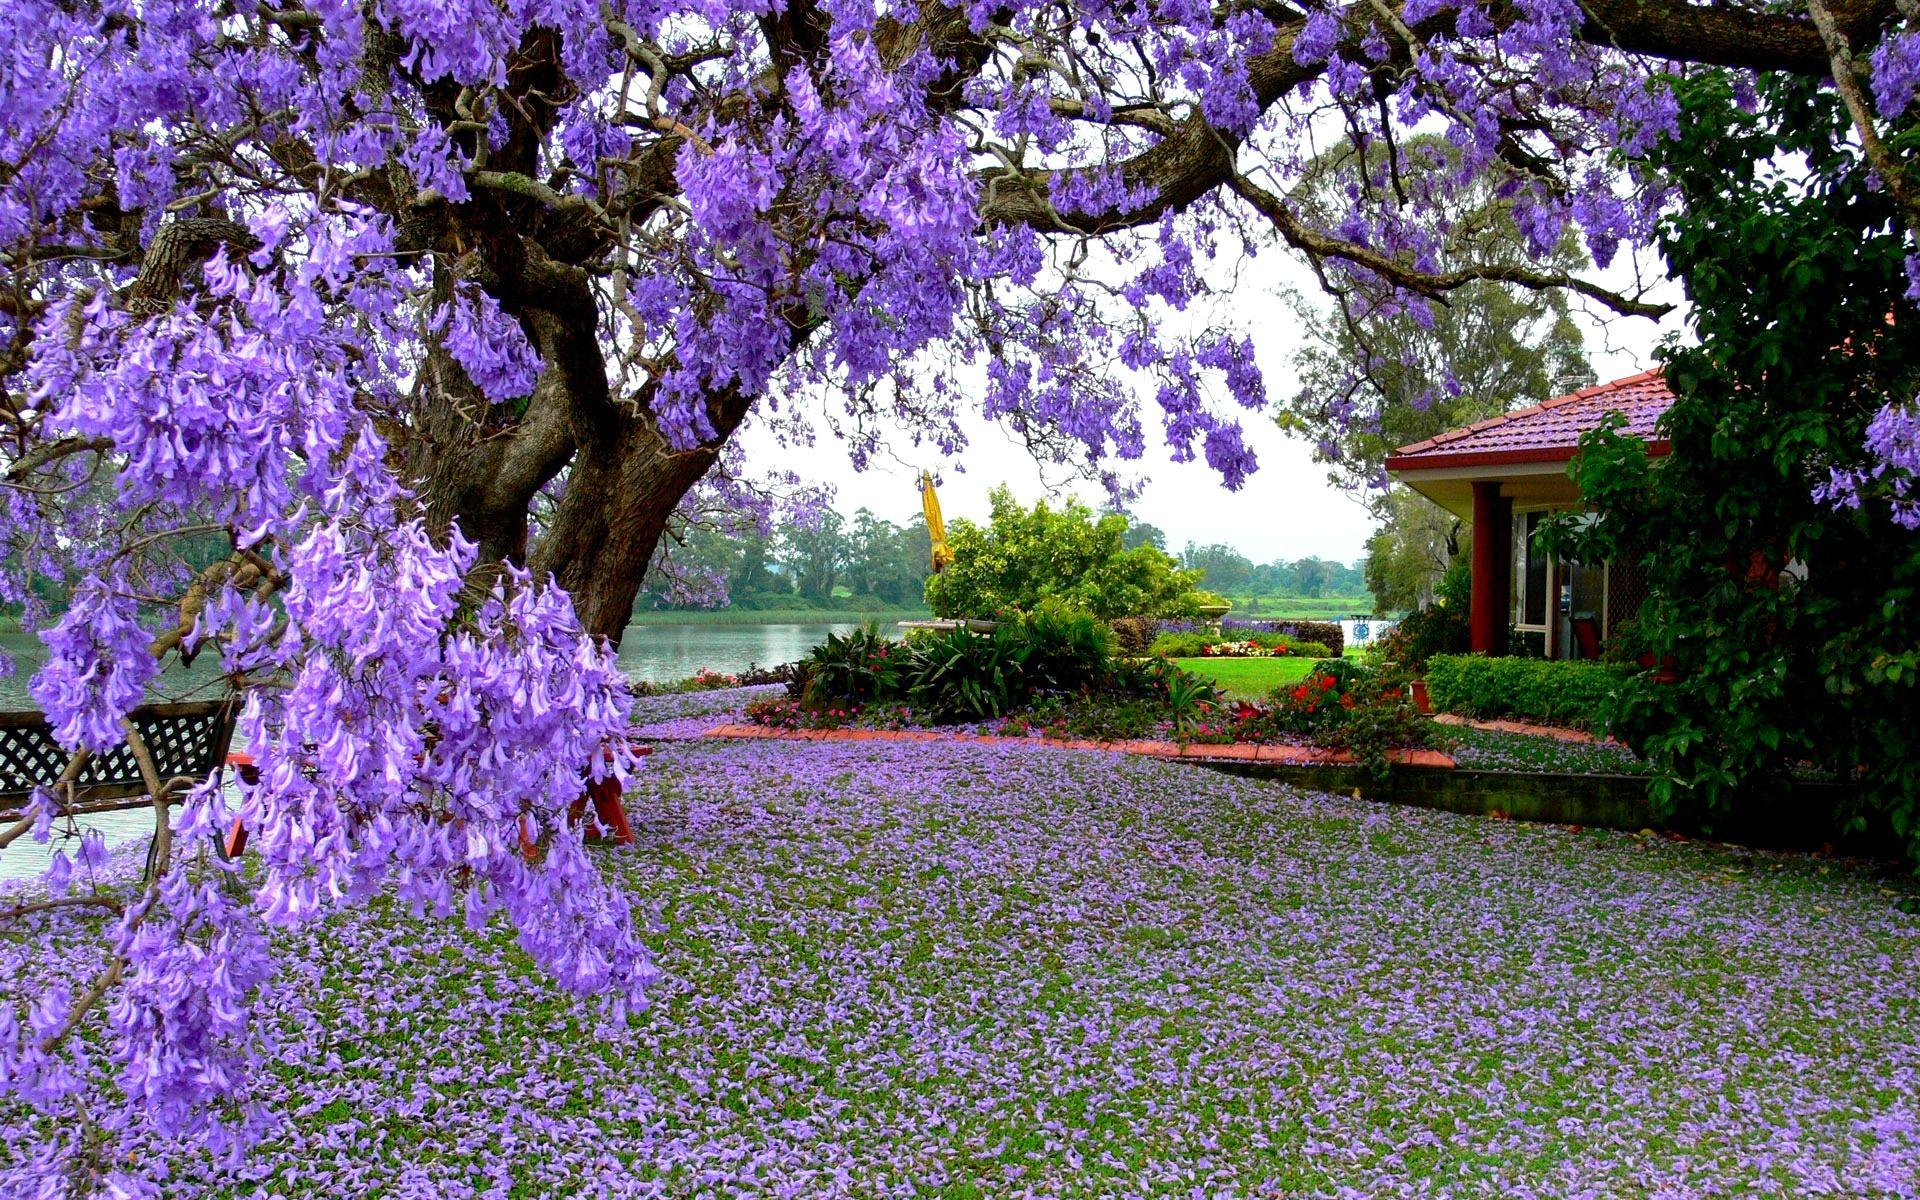 Wallpaper Nature Spring HD Full Photo High Resolution For Desktop